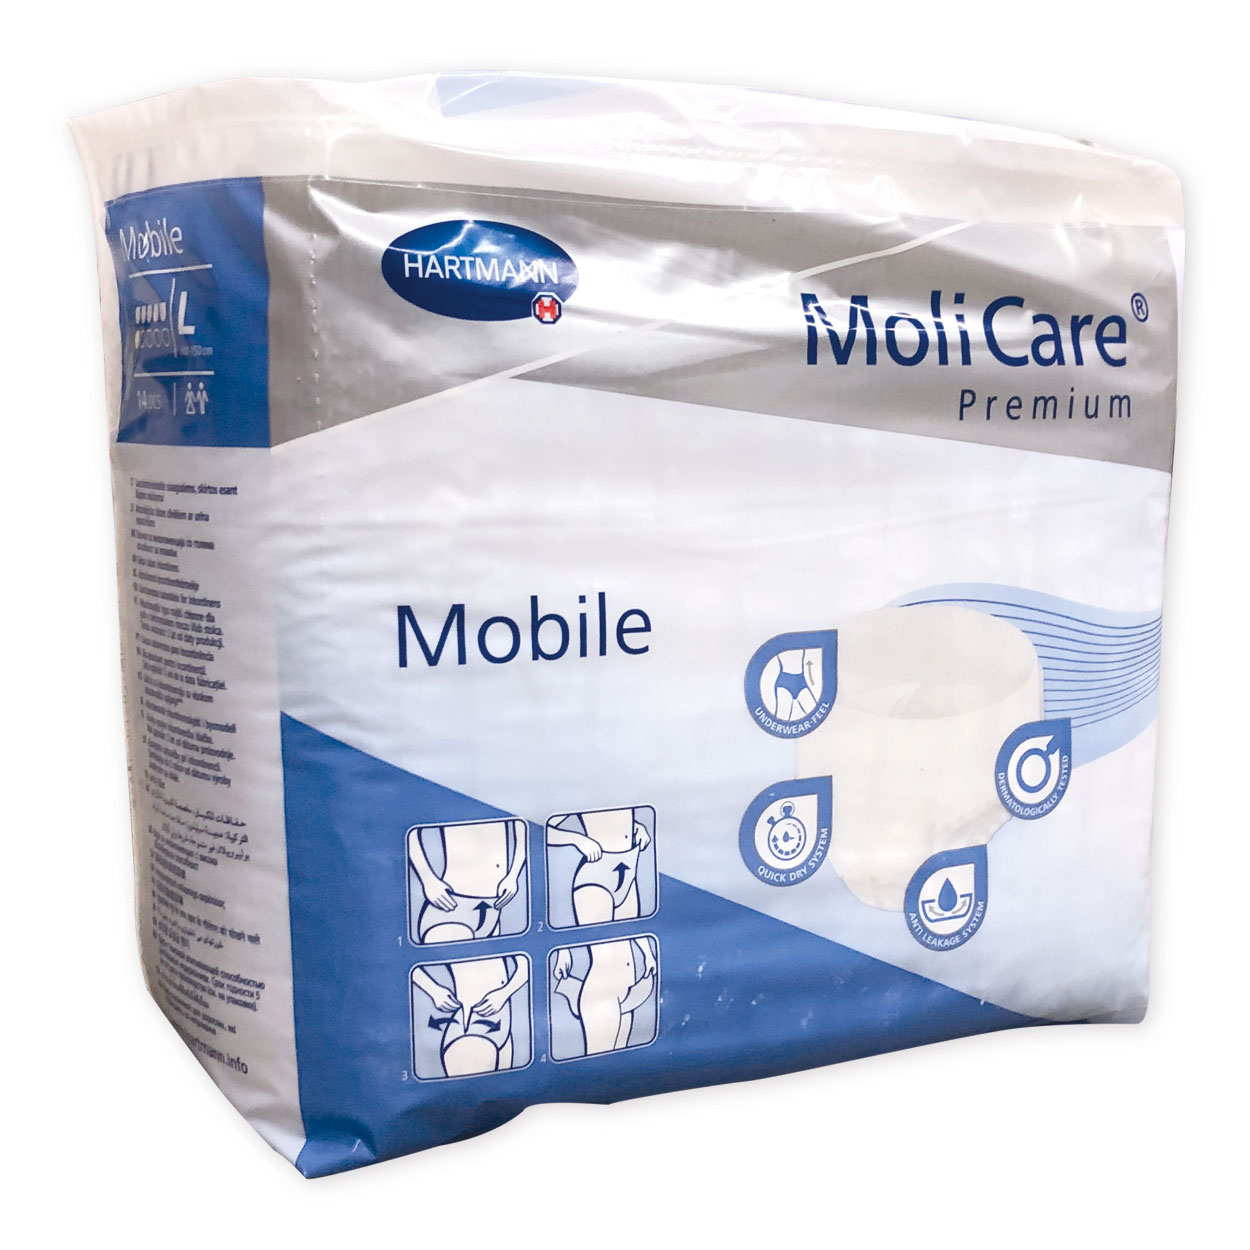 MoliCare® Premium Mobile 6 drops - Karton à 4 Packungen (à 14 Stück)